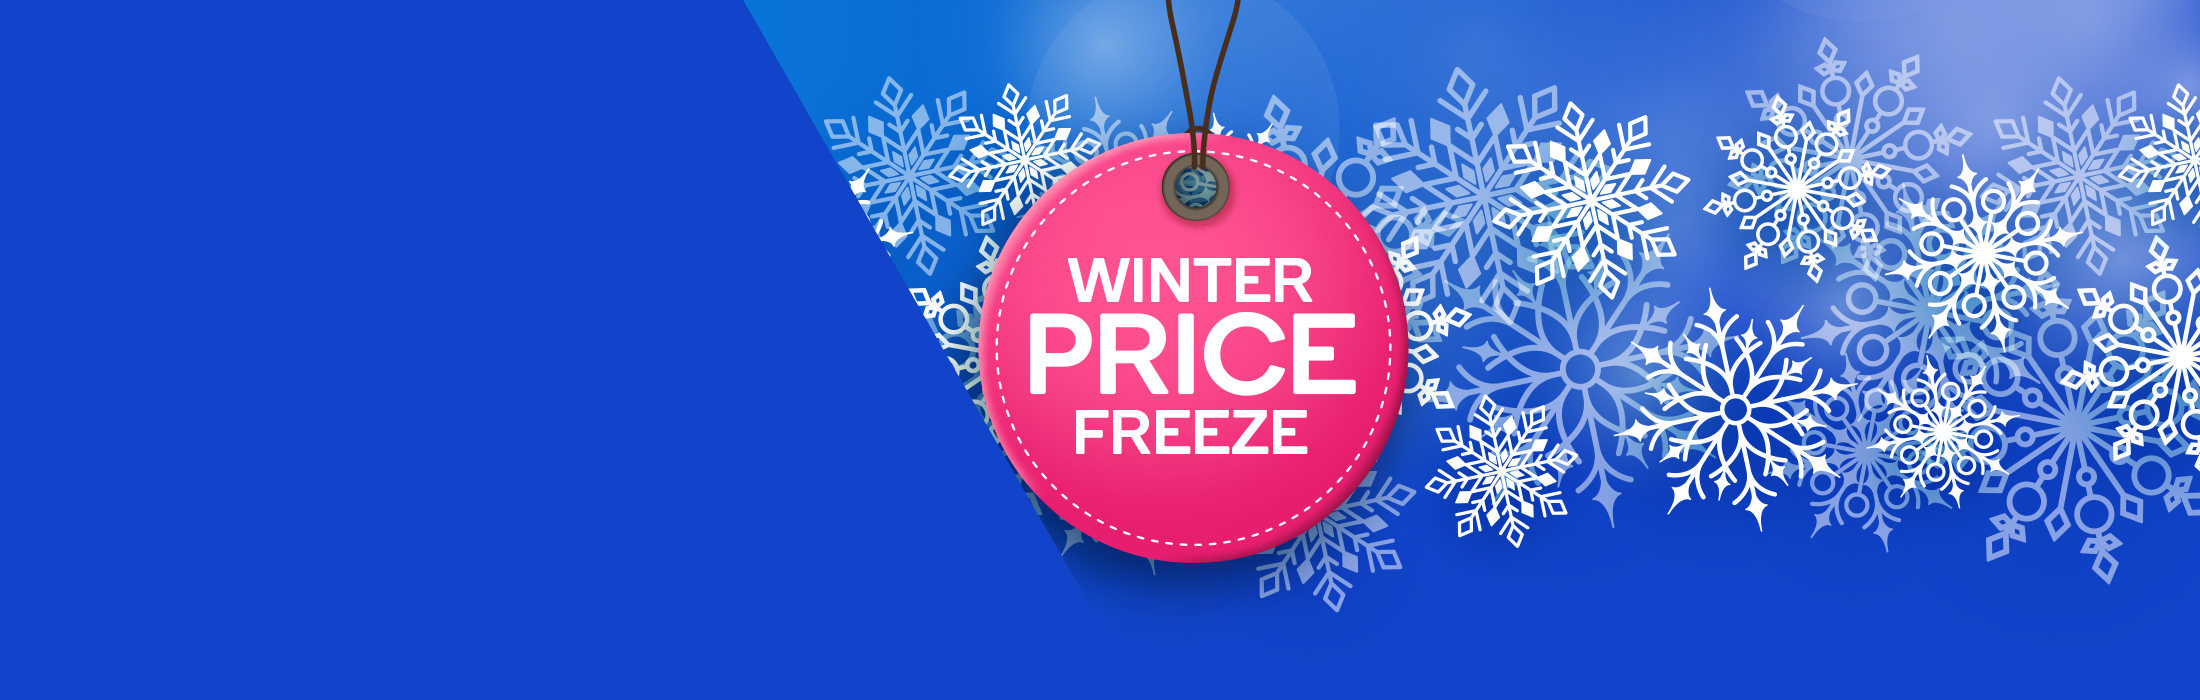 Winter Price Freeze